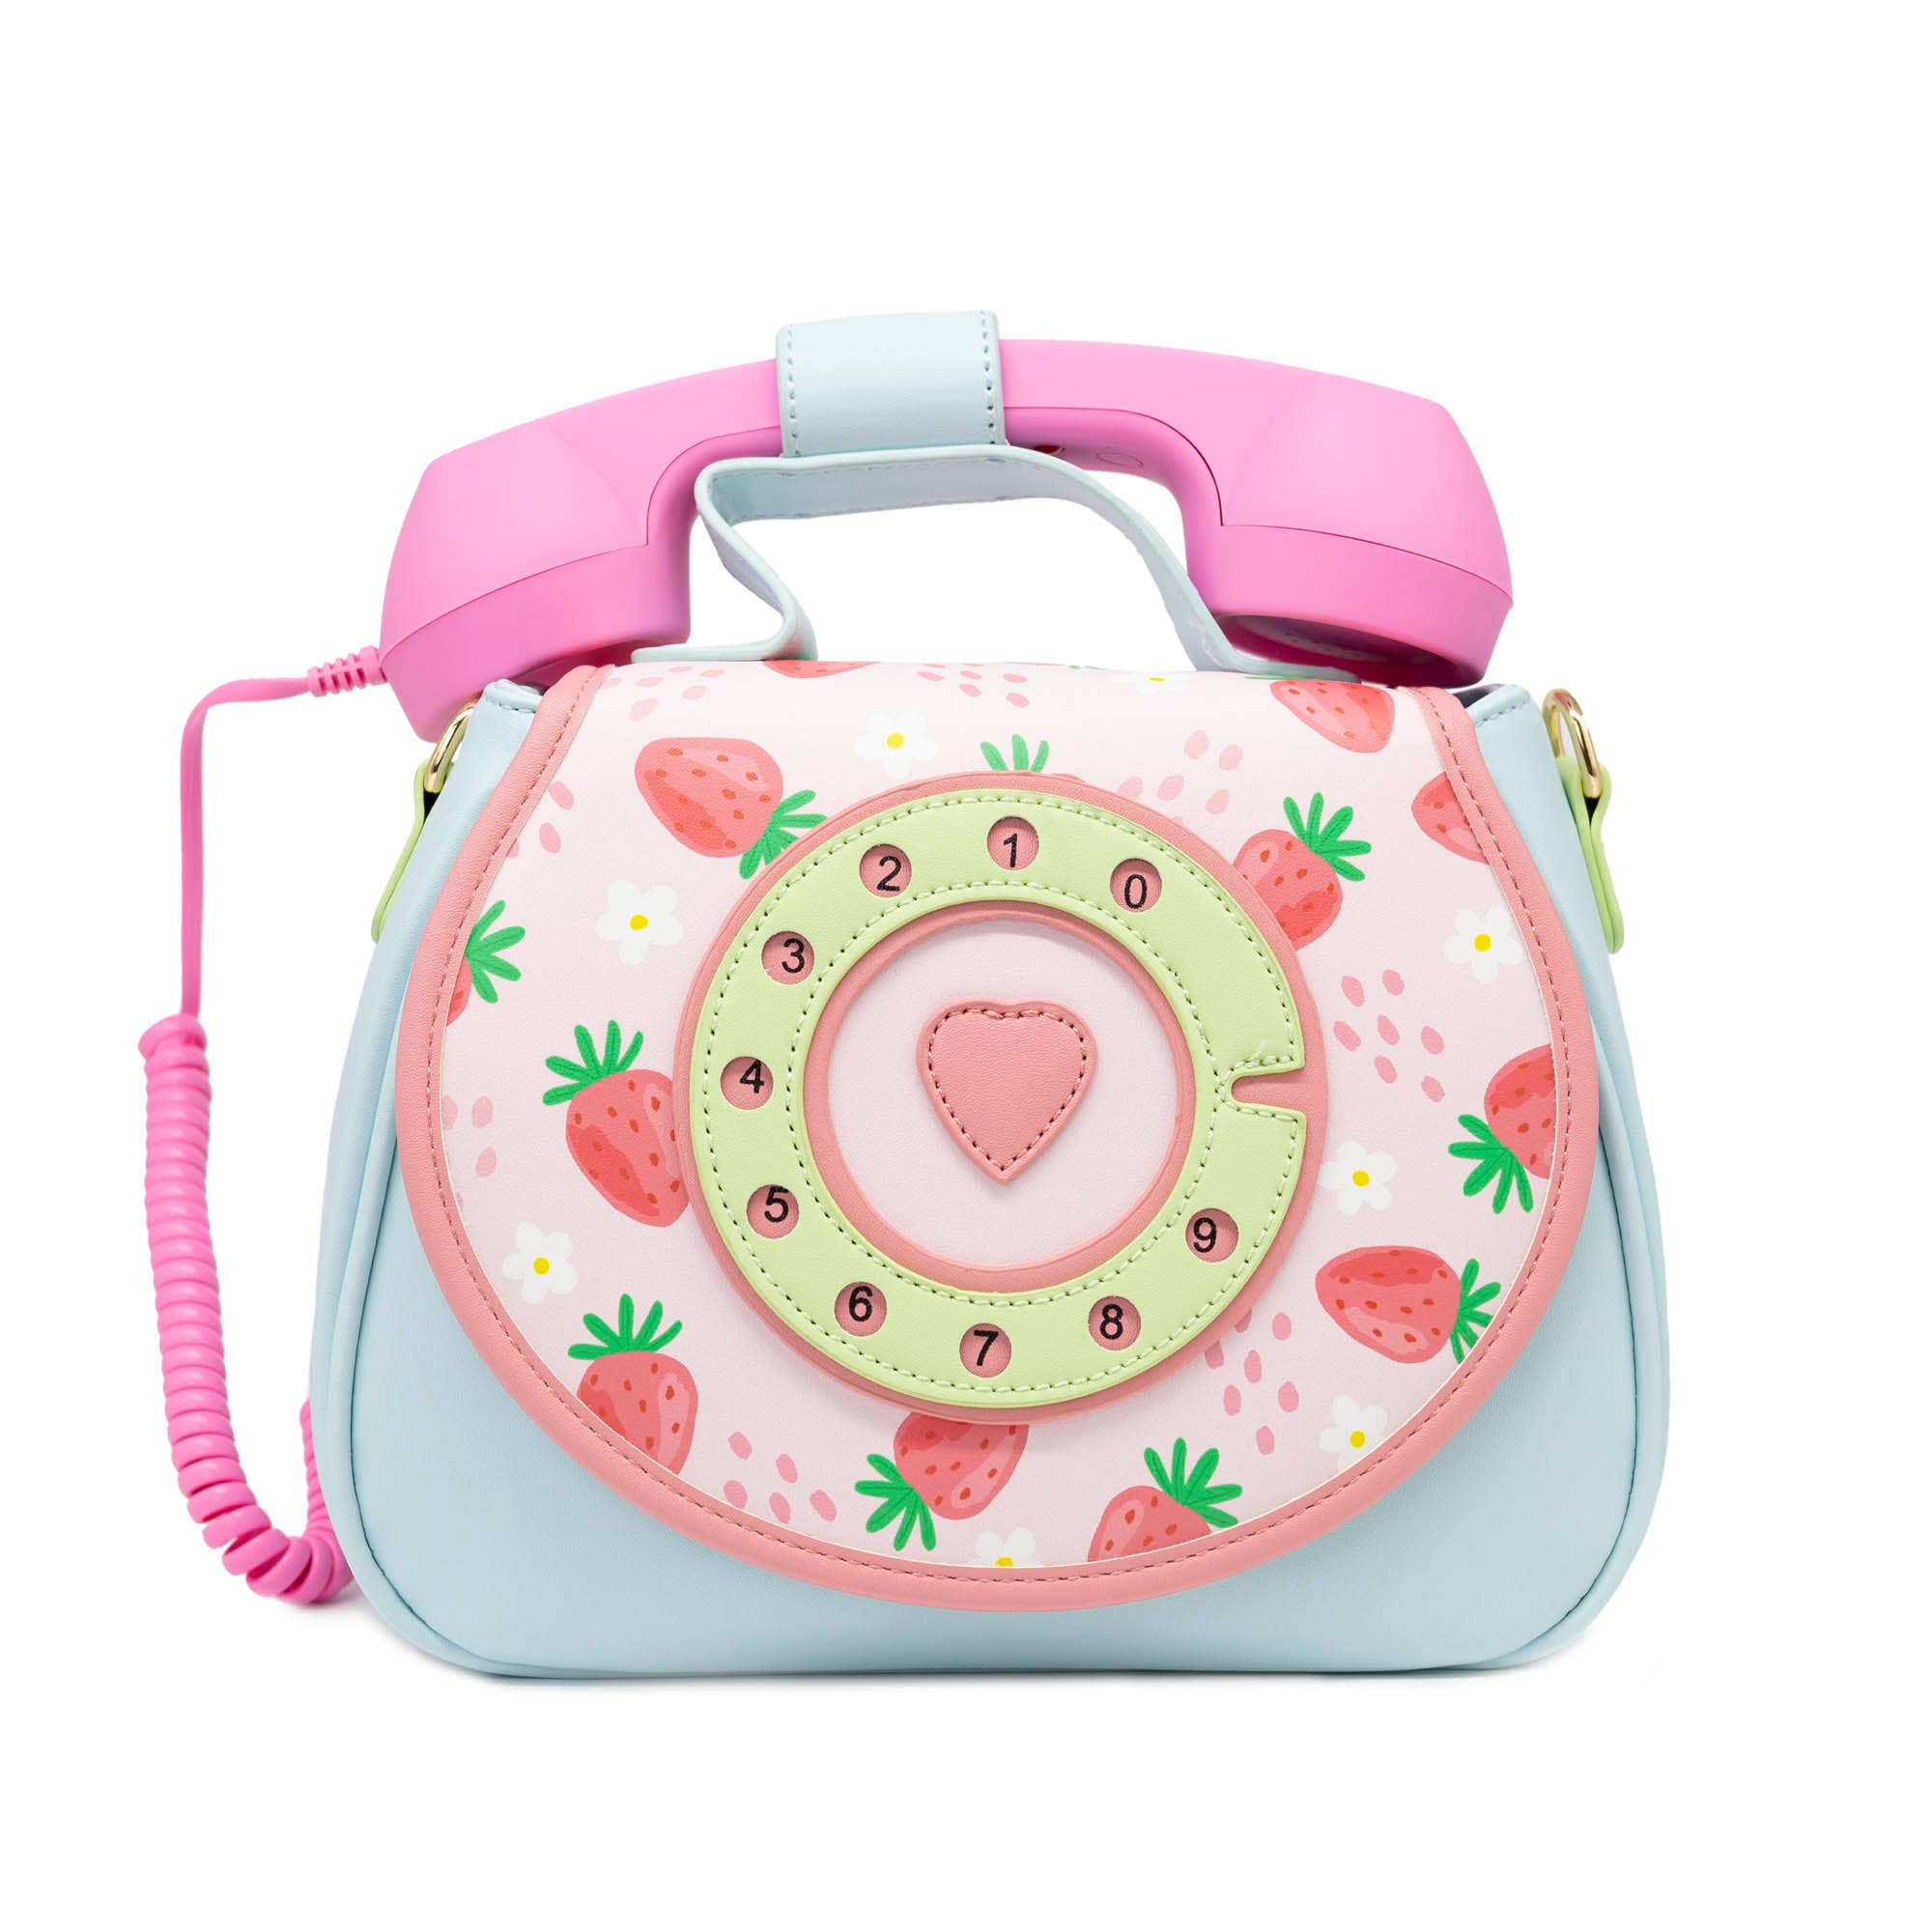 Ring Ring Phone Convertible Handbag | Strawberry Fields